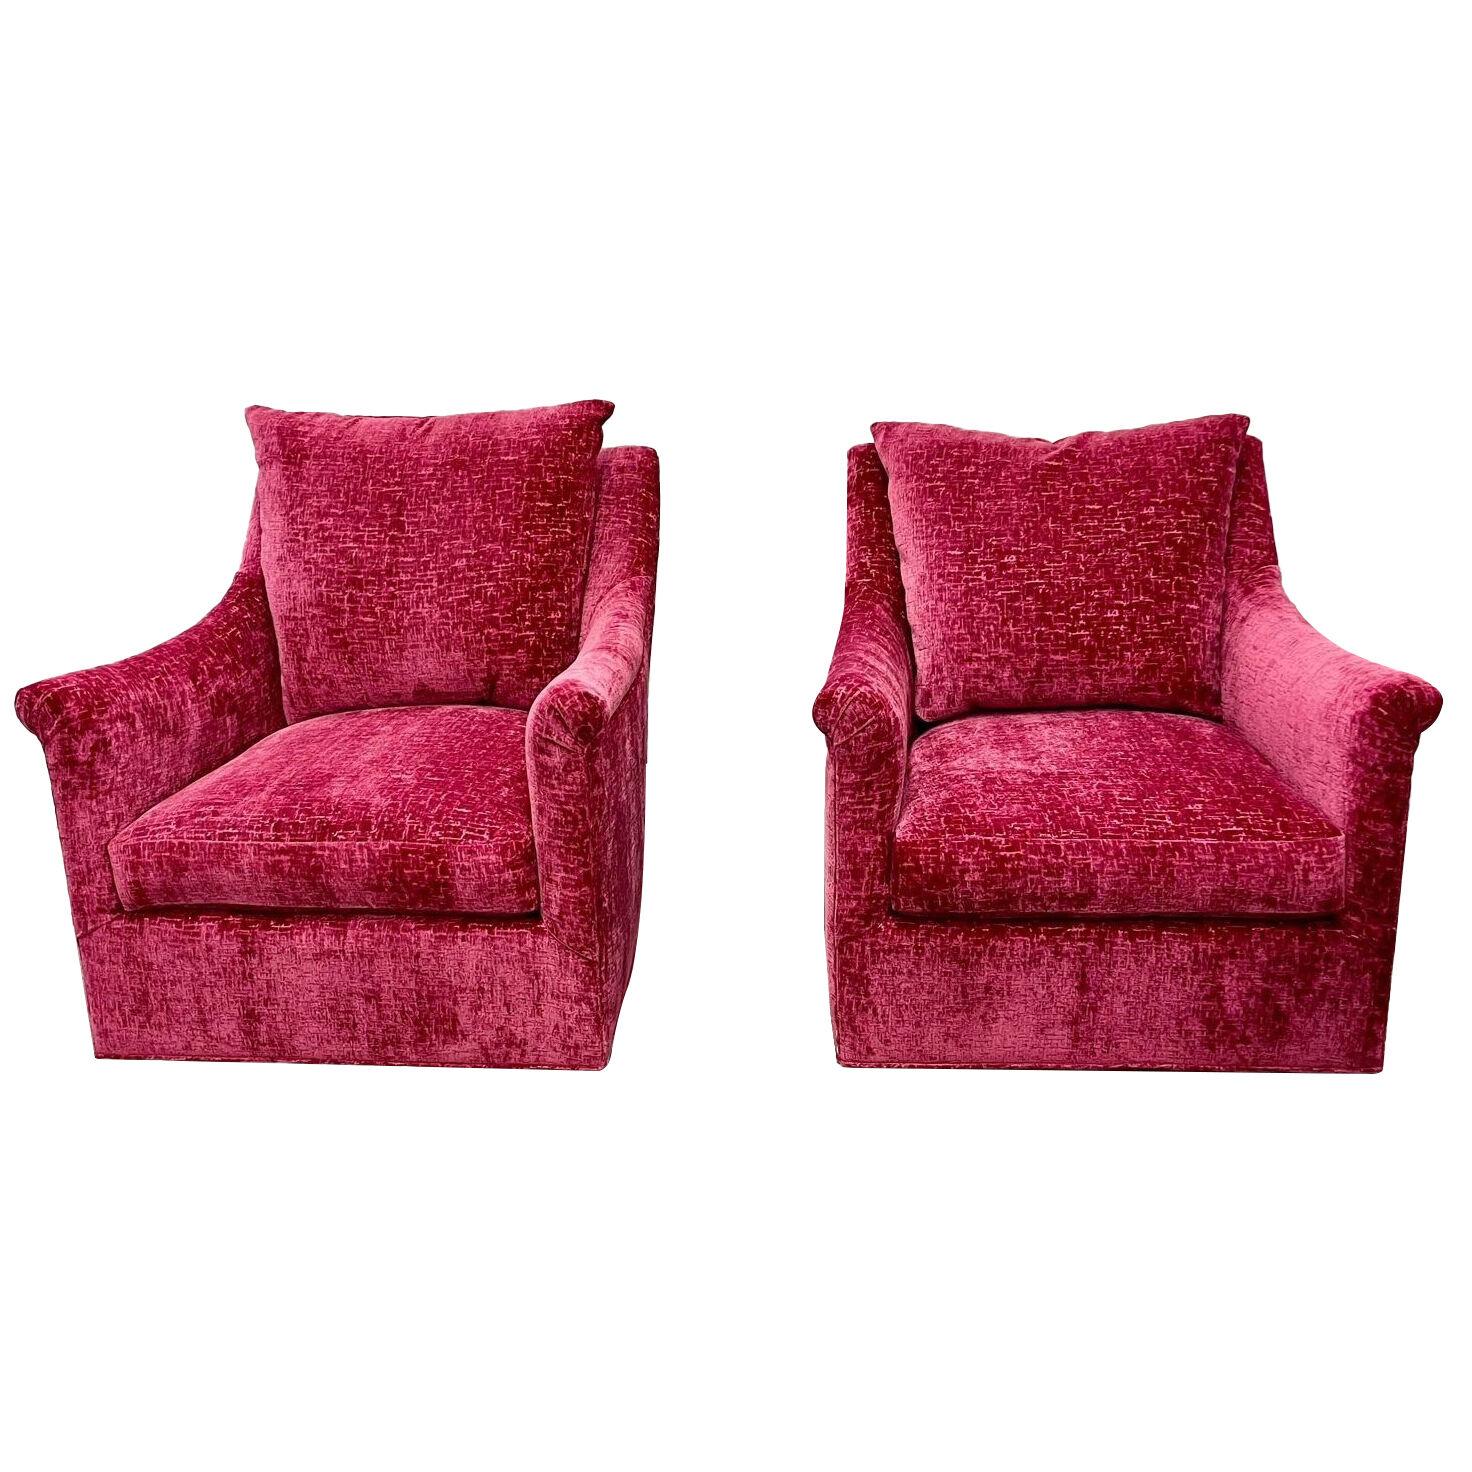 Pair of Fuchsia High Back Swivel Chairs, American Designer, New Upholstery